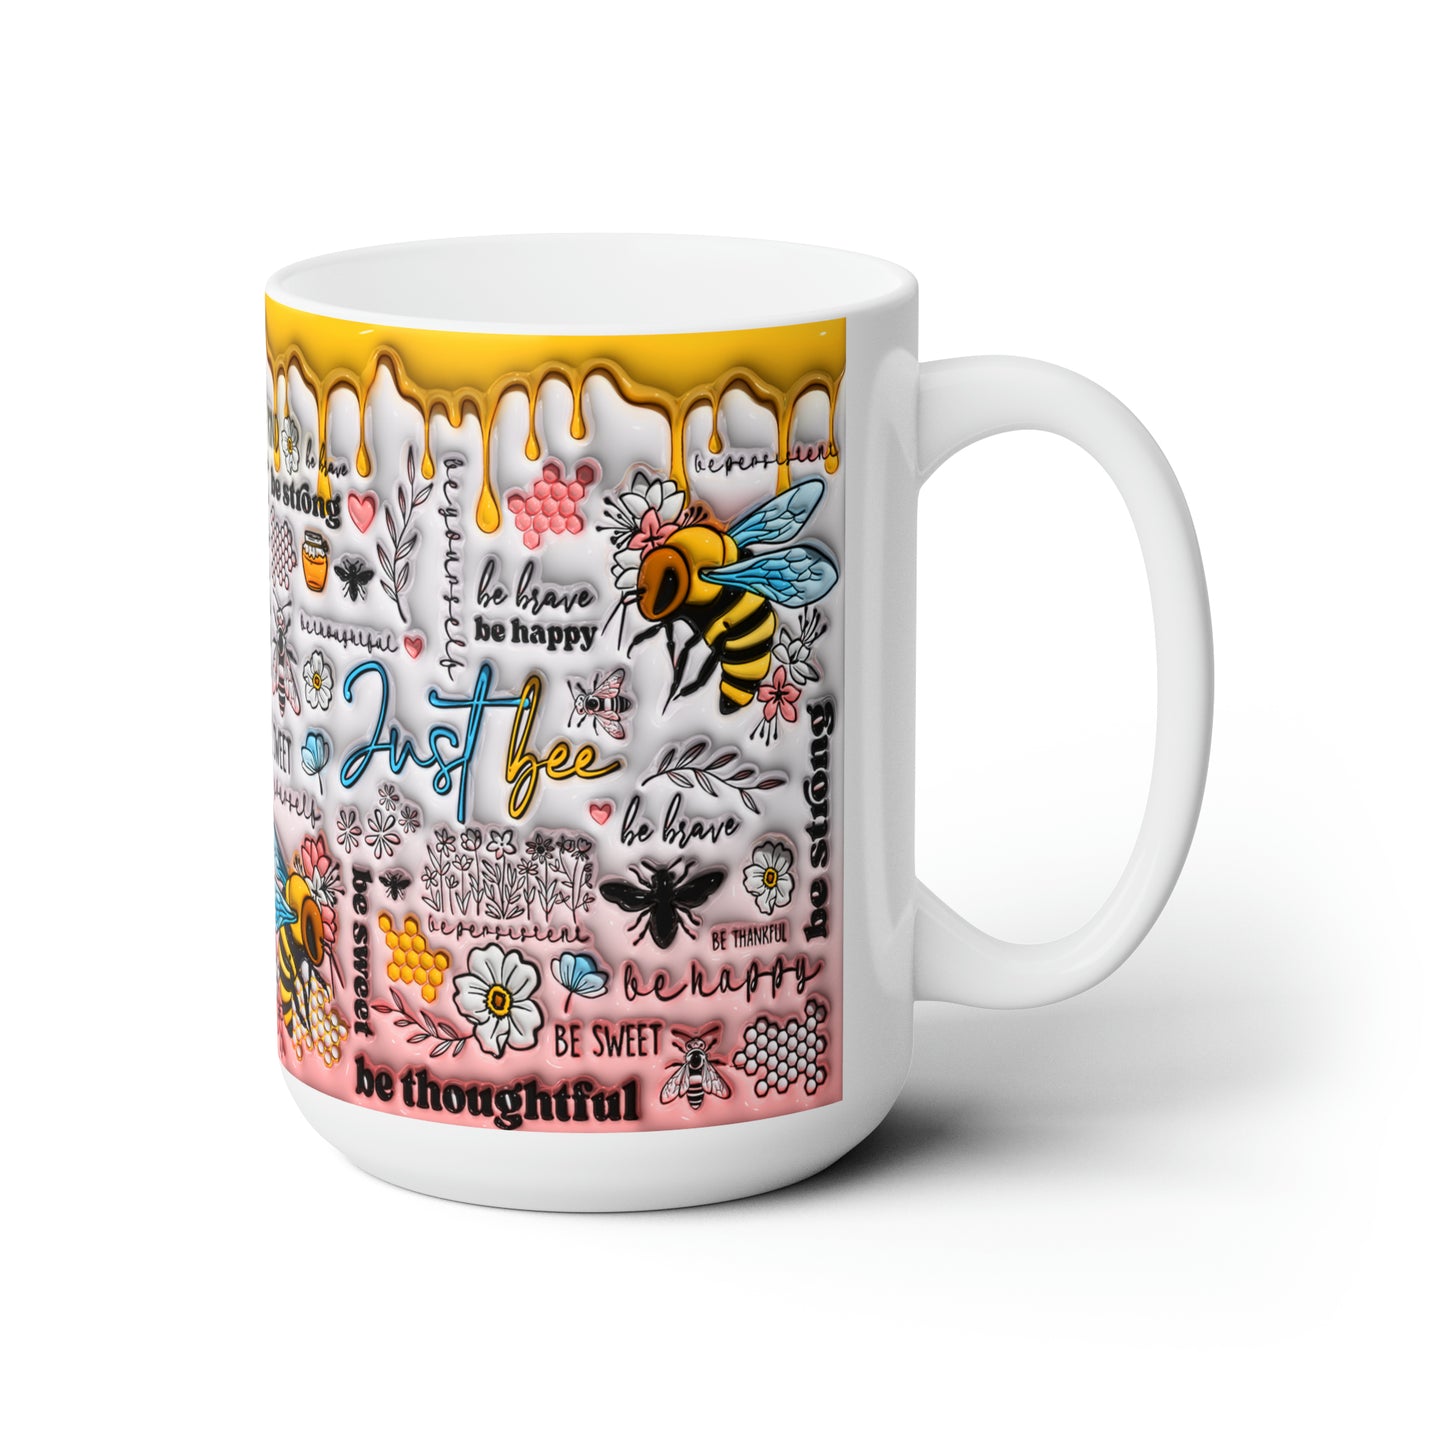 Sip Positivity with Our Inspirational Saying Mug!